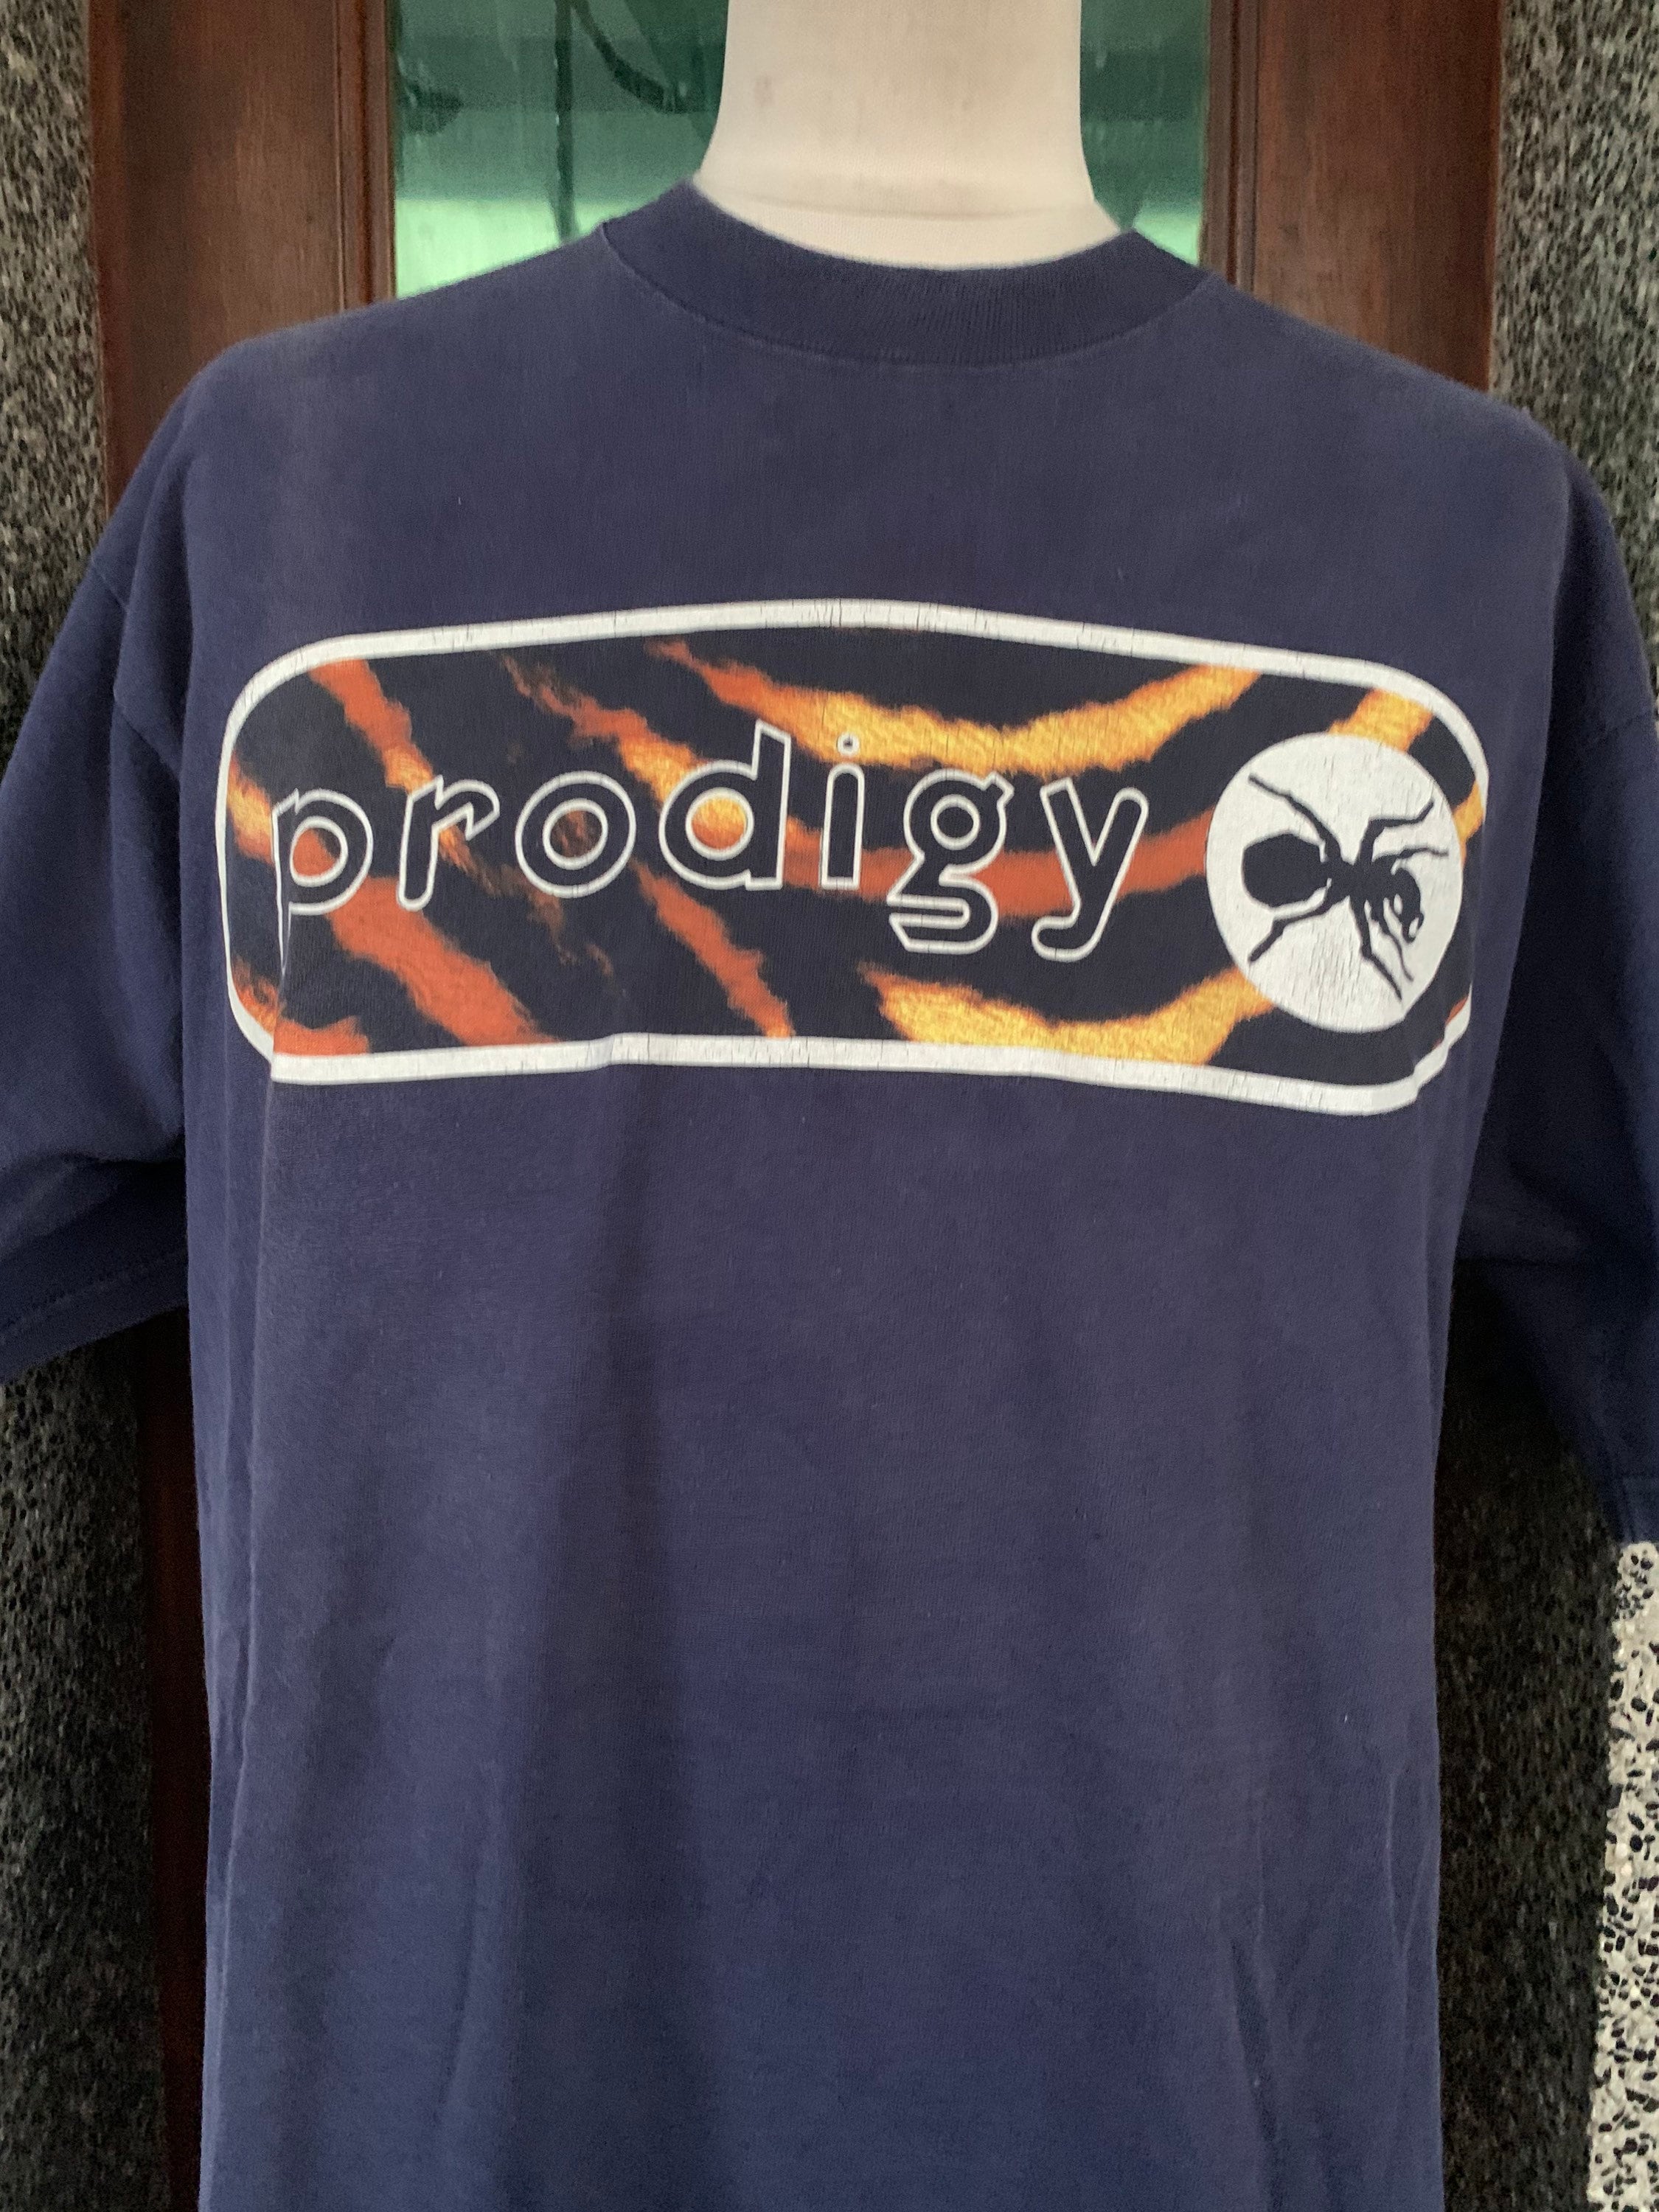 Vintage 90s The Prodigy English Electronic Dance Music Band T Shirt